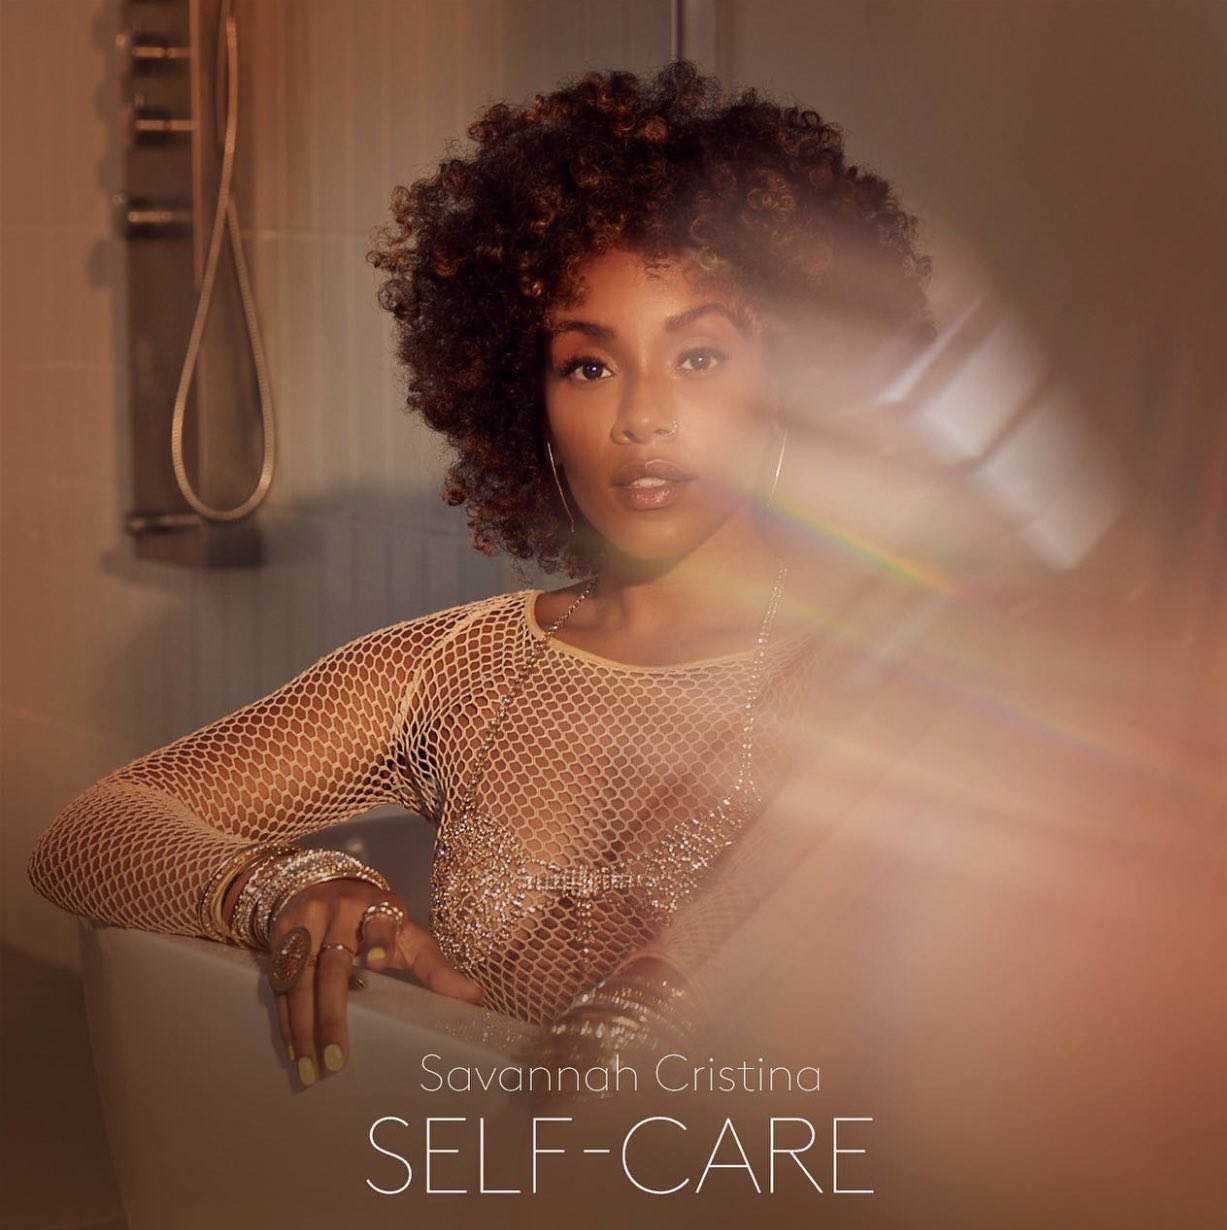 Savannah Cristina Releases New EP "Self-Care" (Stream)